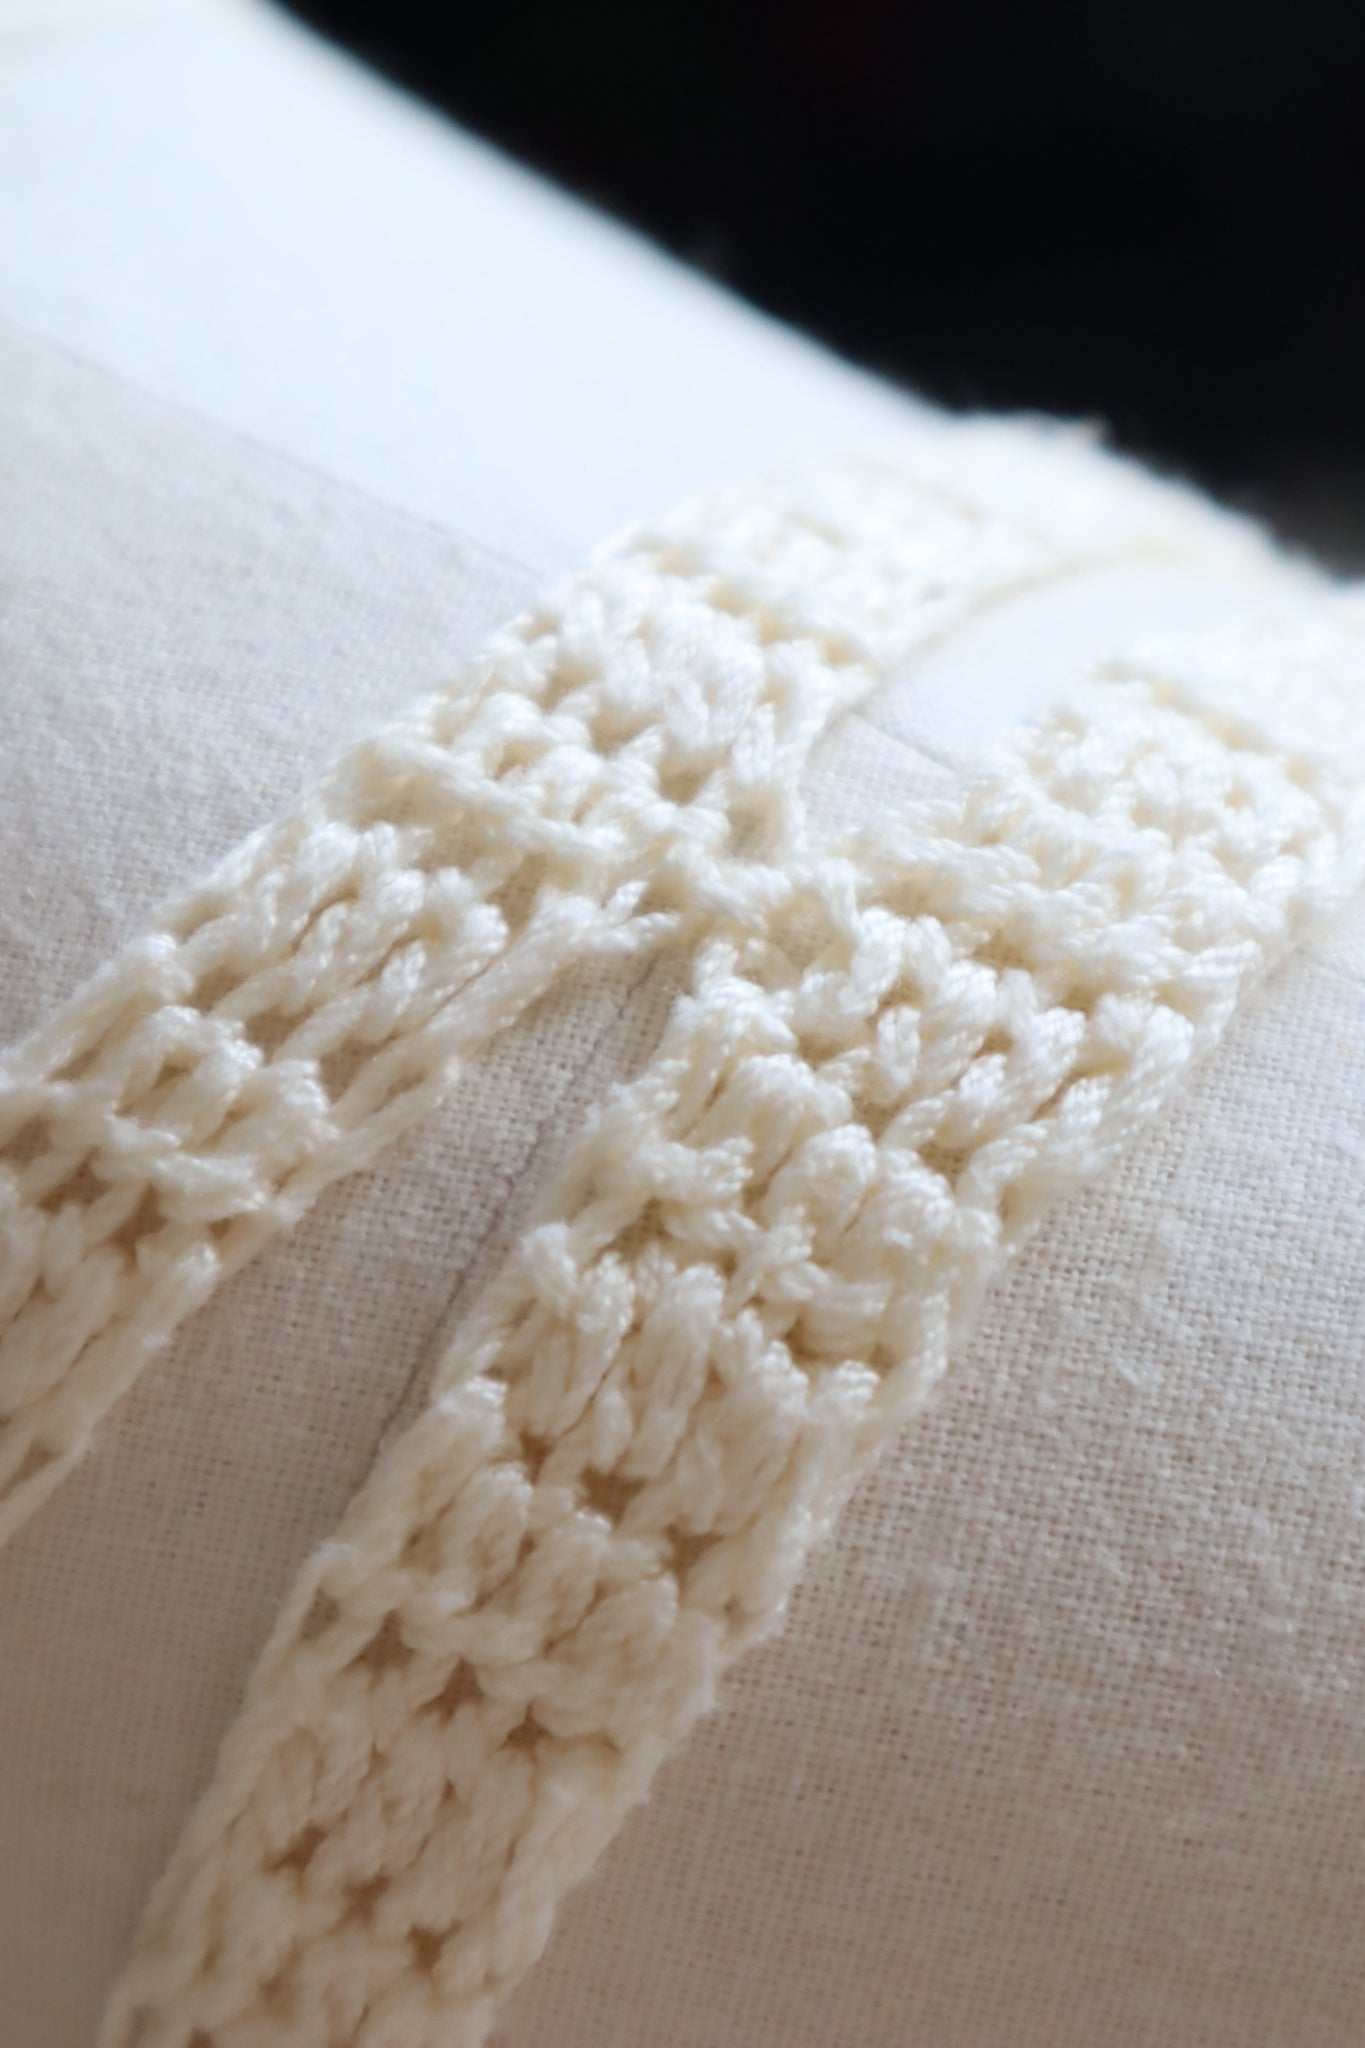 70s Crochet Knit Camisole